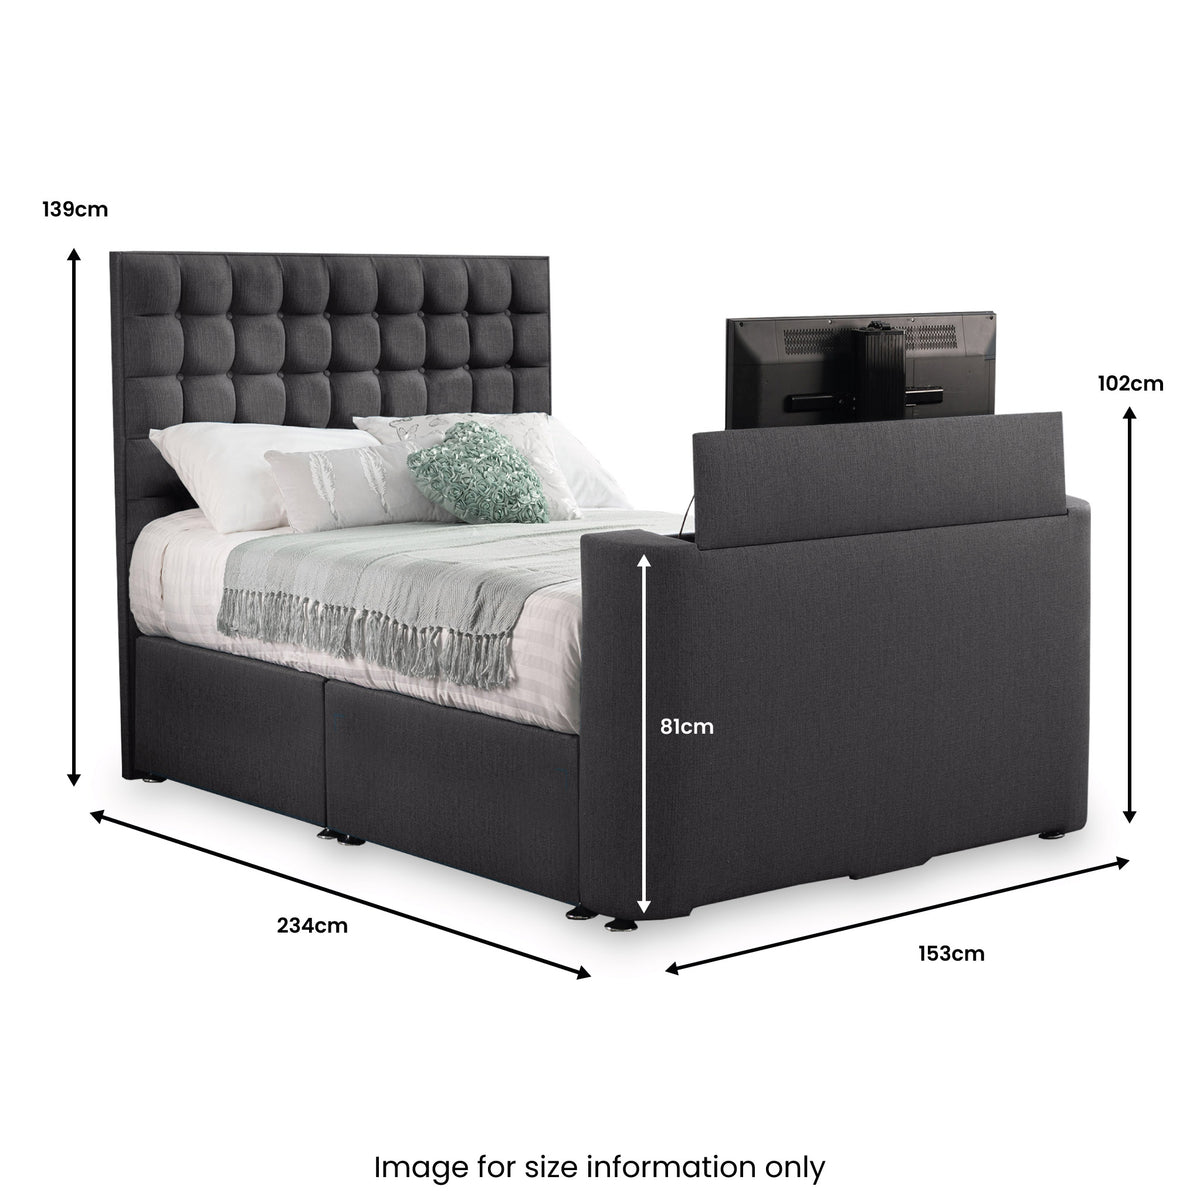 Bridgeford Linen TV Bed from Roseland Furniture